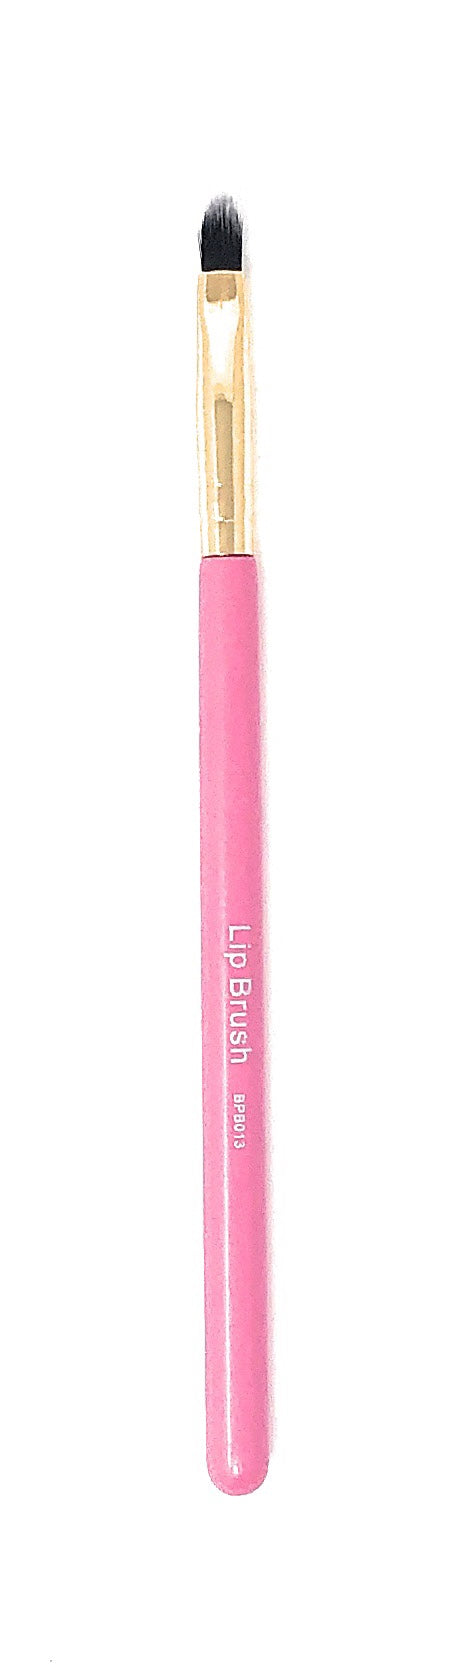 BlackPink Lip Brush BPB013 - Beauty Bar & Supply